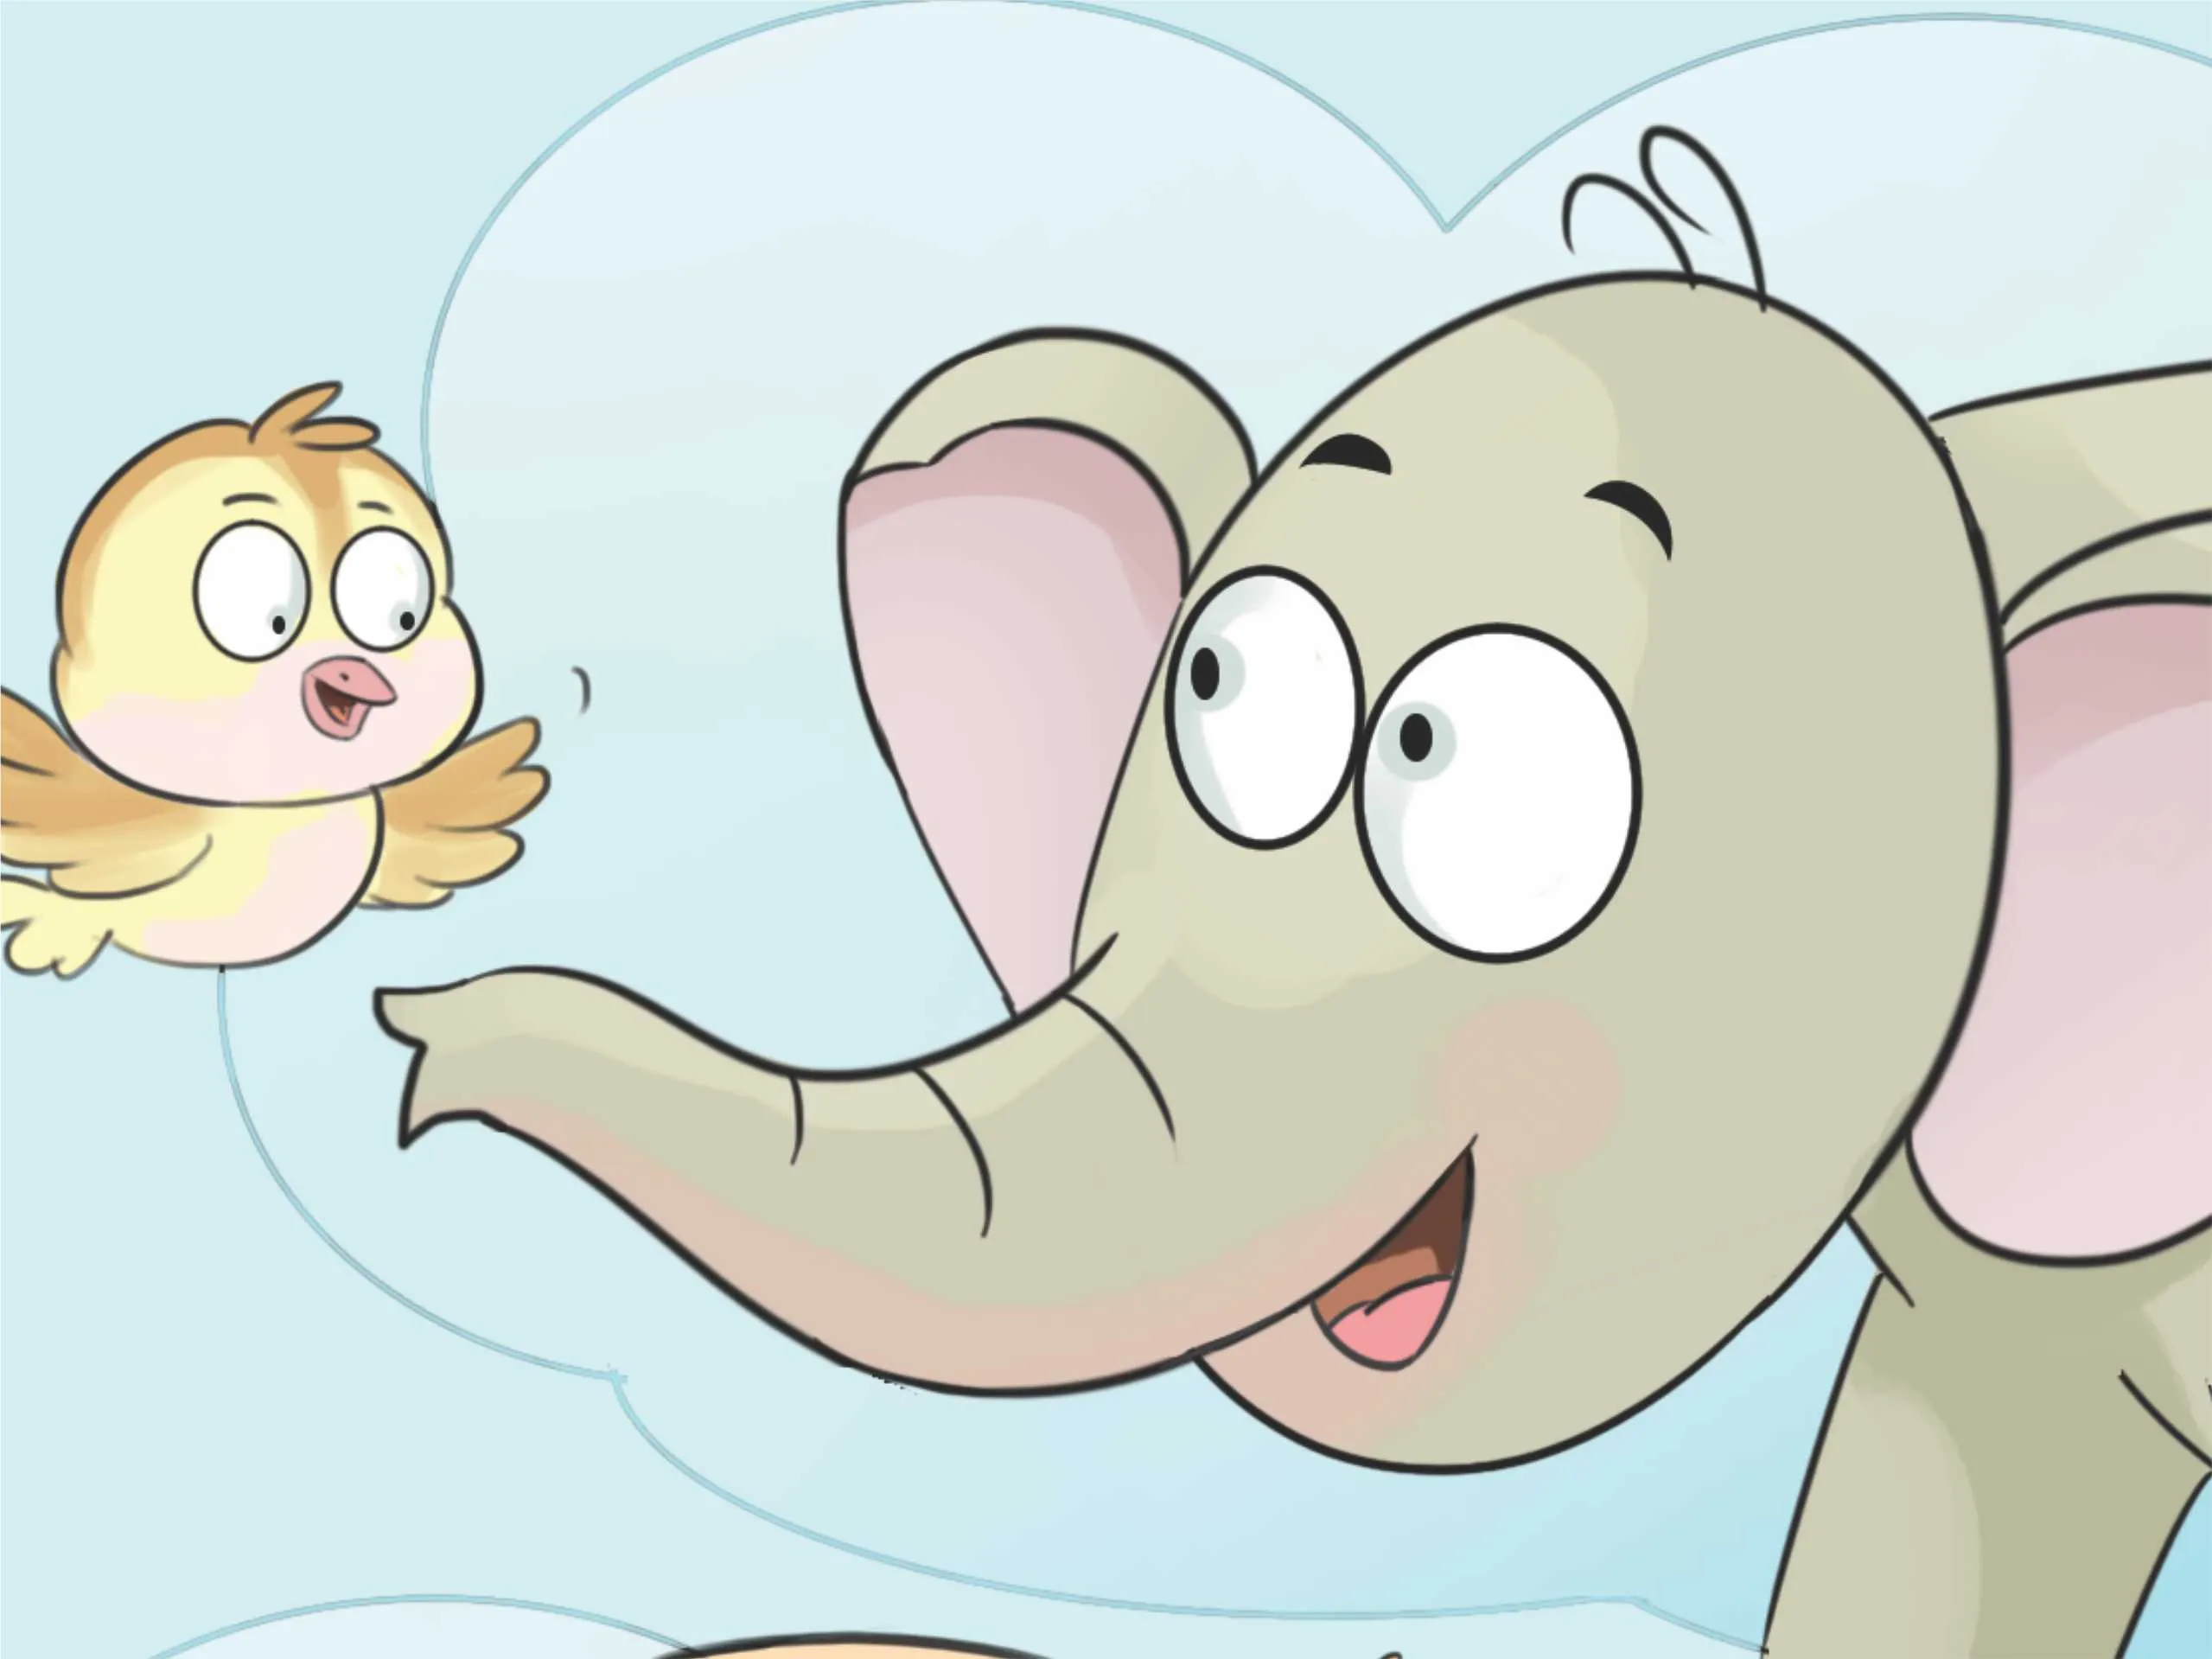 Cartoon image of an elephant and bird